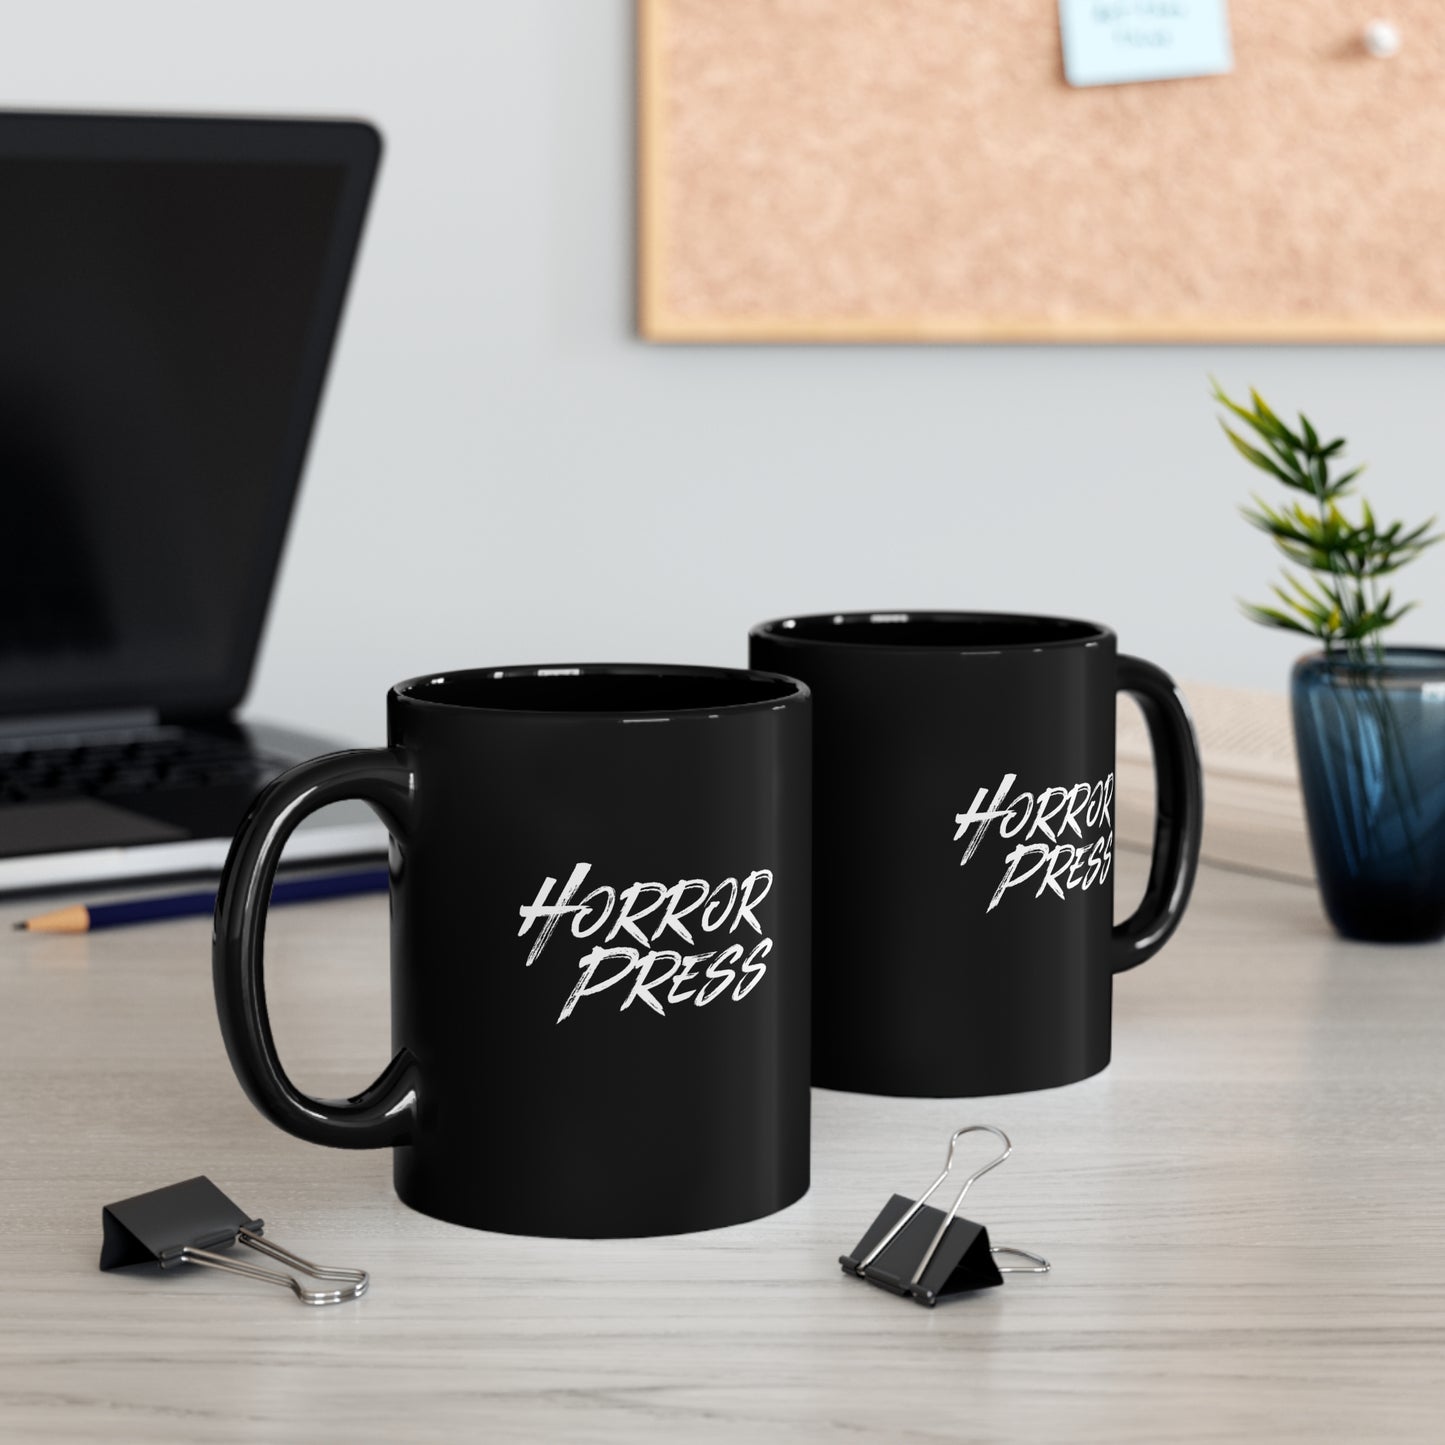 Horror Press Mug - 11oz Black Mug - Coffee Mug For Horror Fans - Black Mug Gift for Scary Movie Fan - Horror Press Merch Gifts for Fans